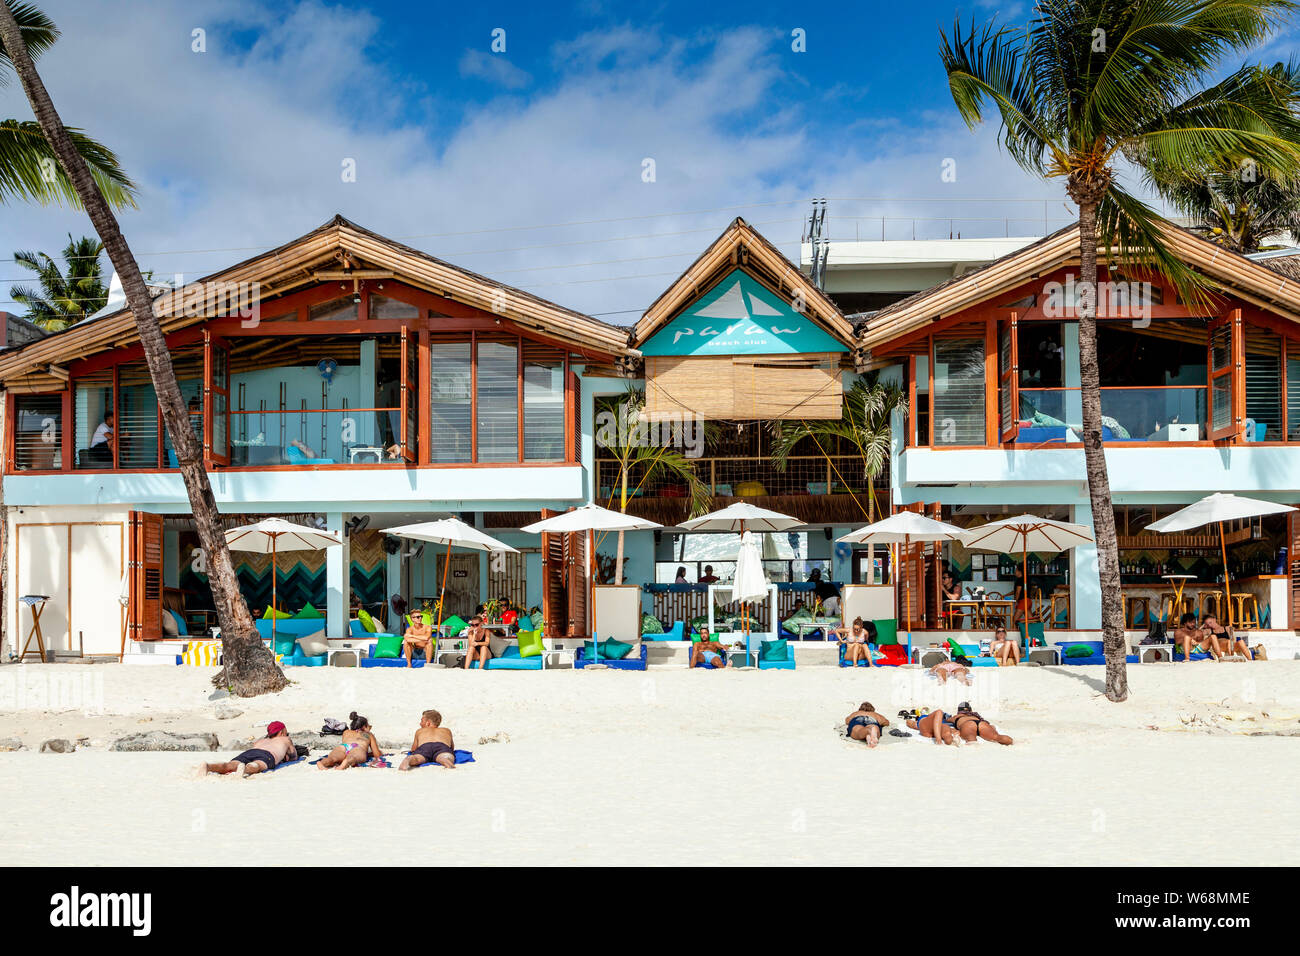 Paraw Beach Club, White Beach, Boracay, Aklan Province, The Philippines Stock Photo